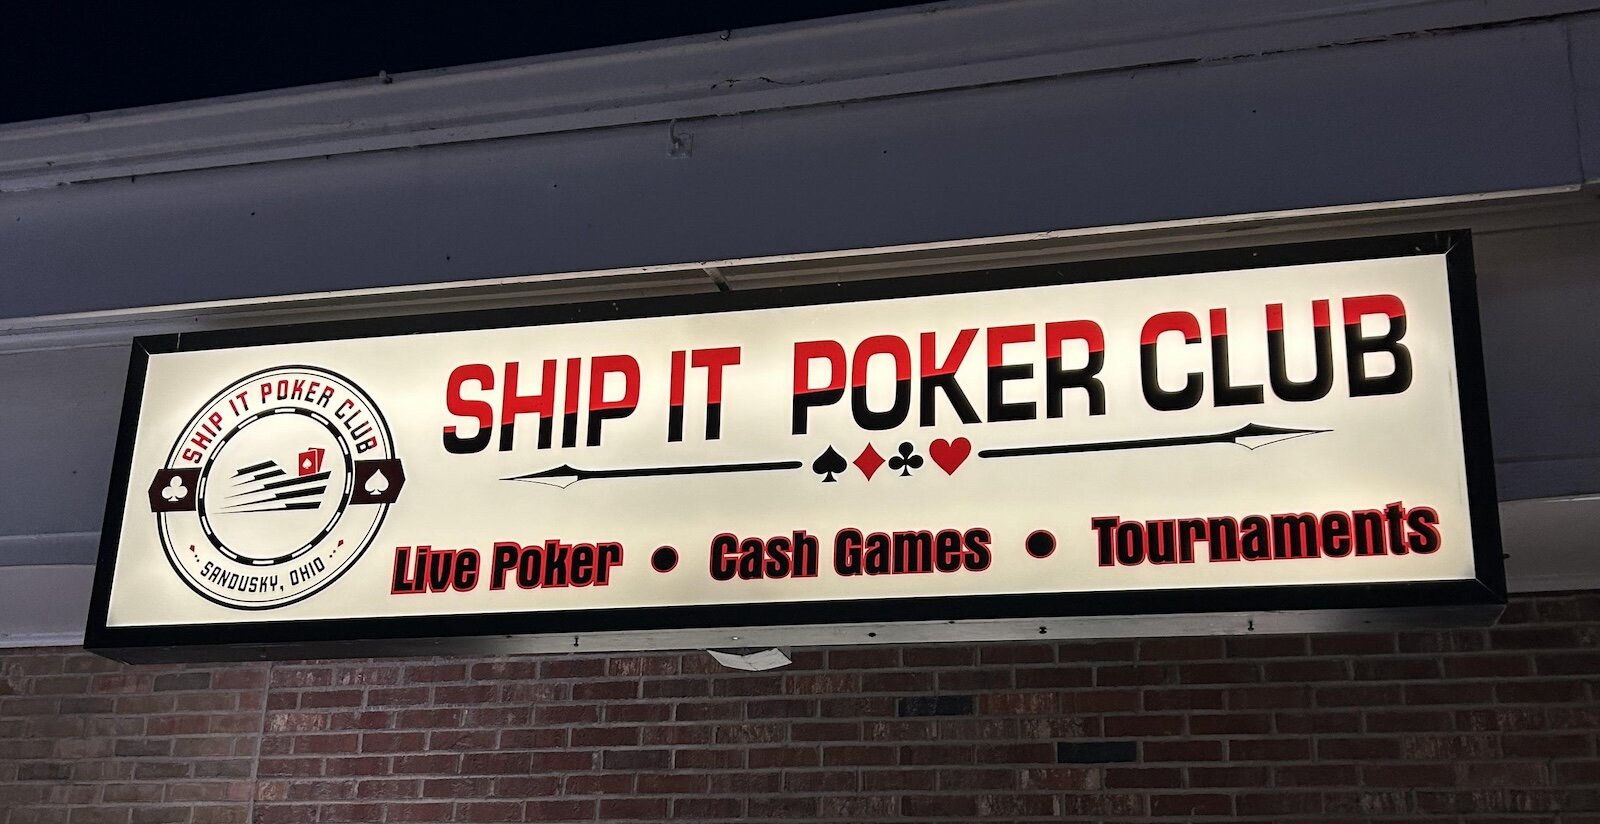 New poker club ships into Perkins Township